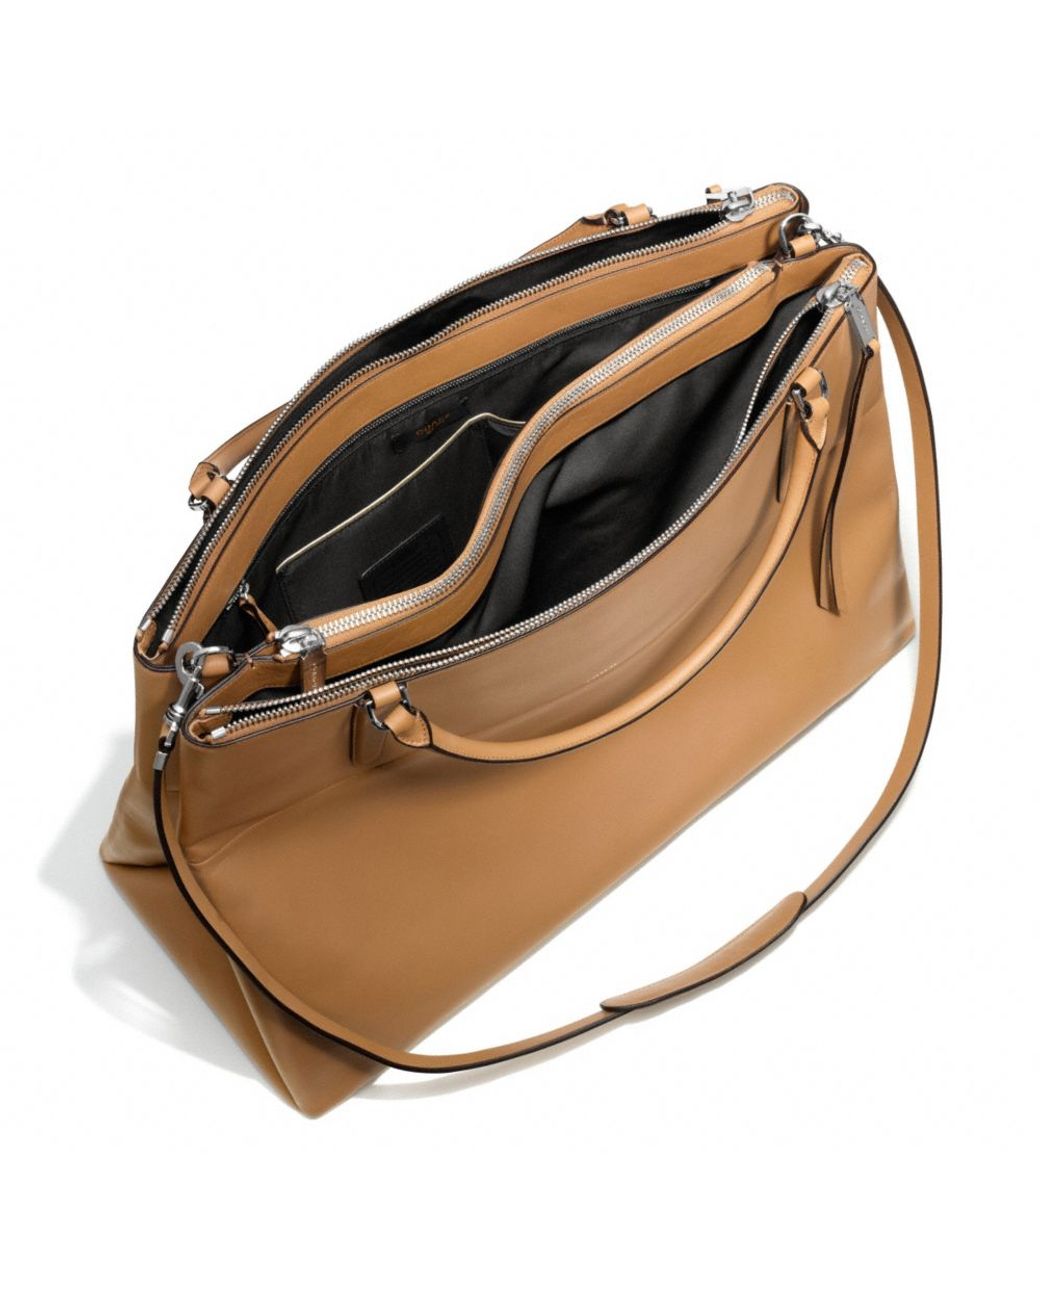 COACH The Xl Borough Bag in Retro Glove Tan Leather in Brown | Lyst